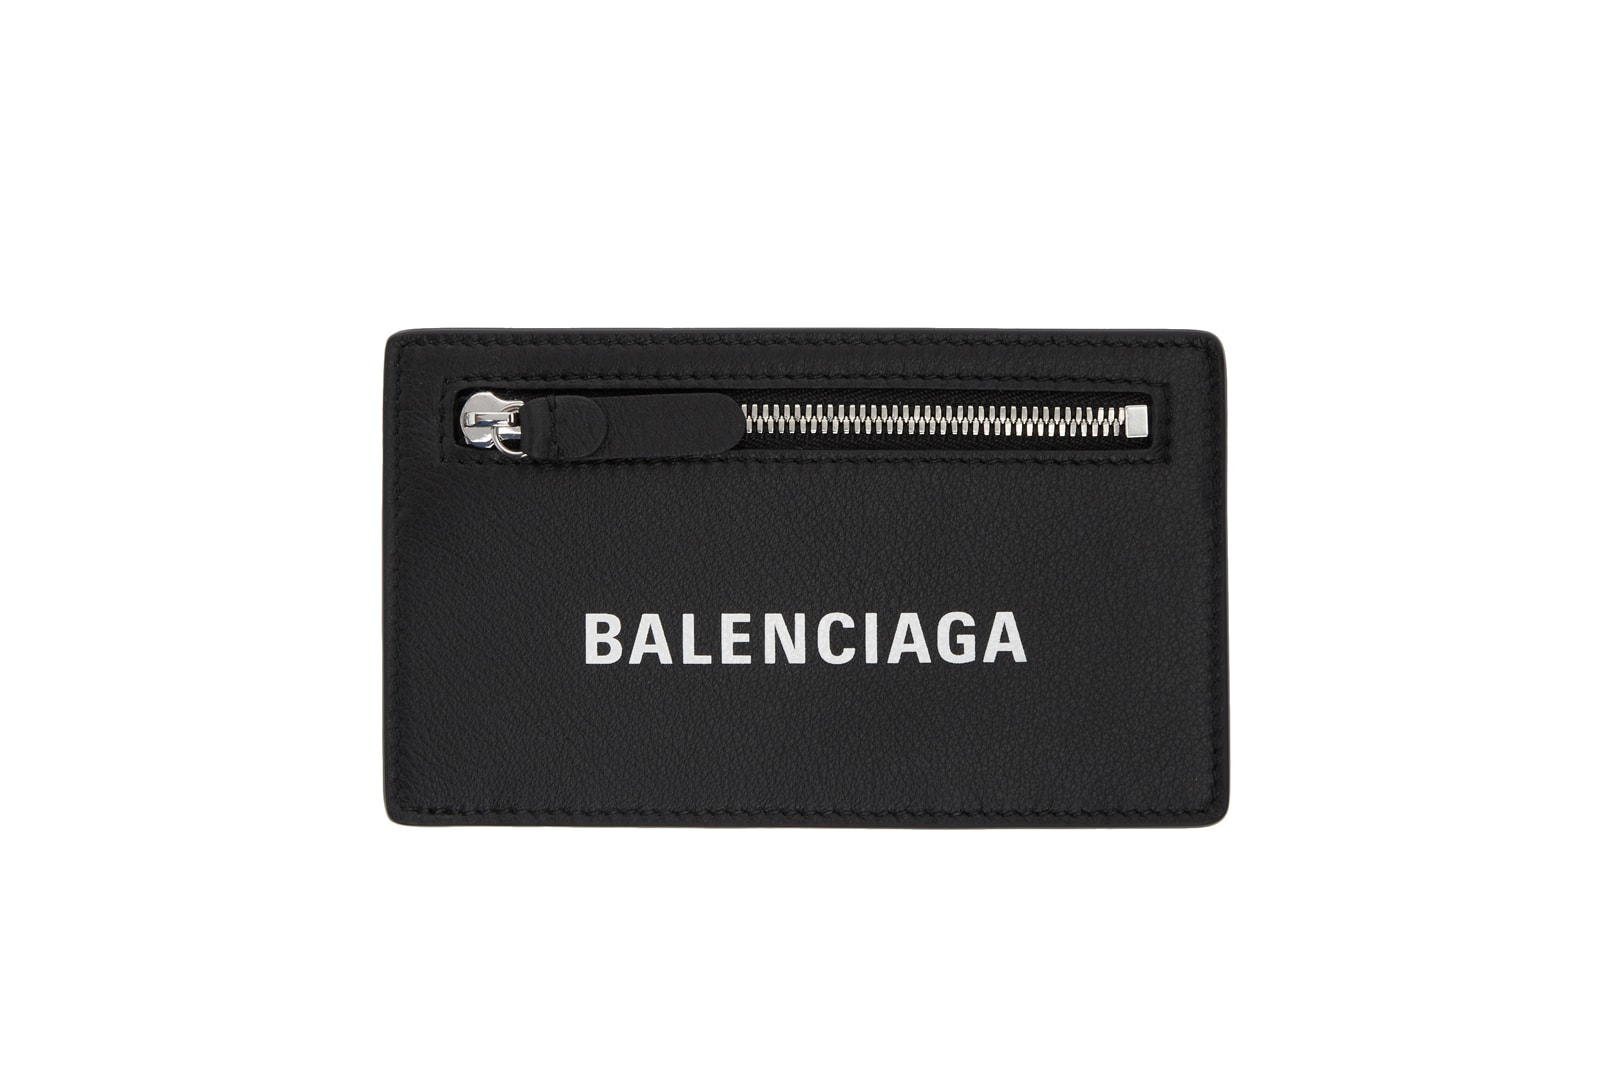 Balenciaga Logo Tote Bag Wallet Accessories